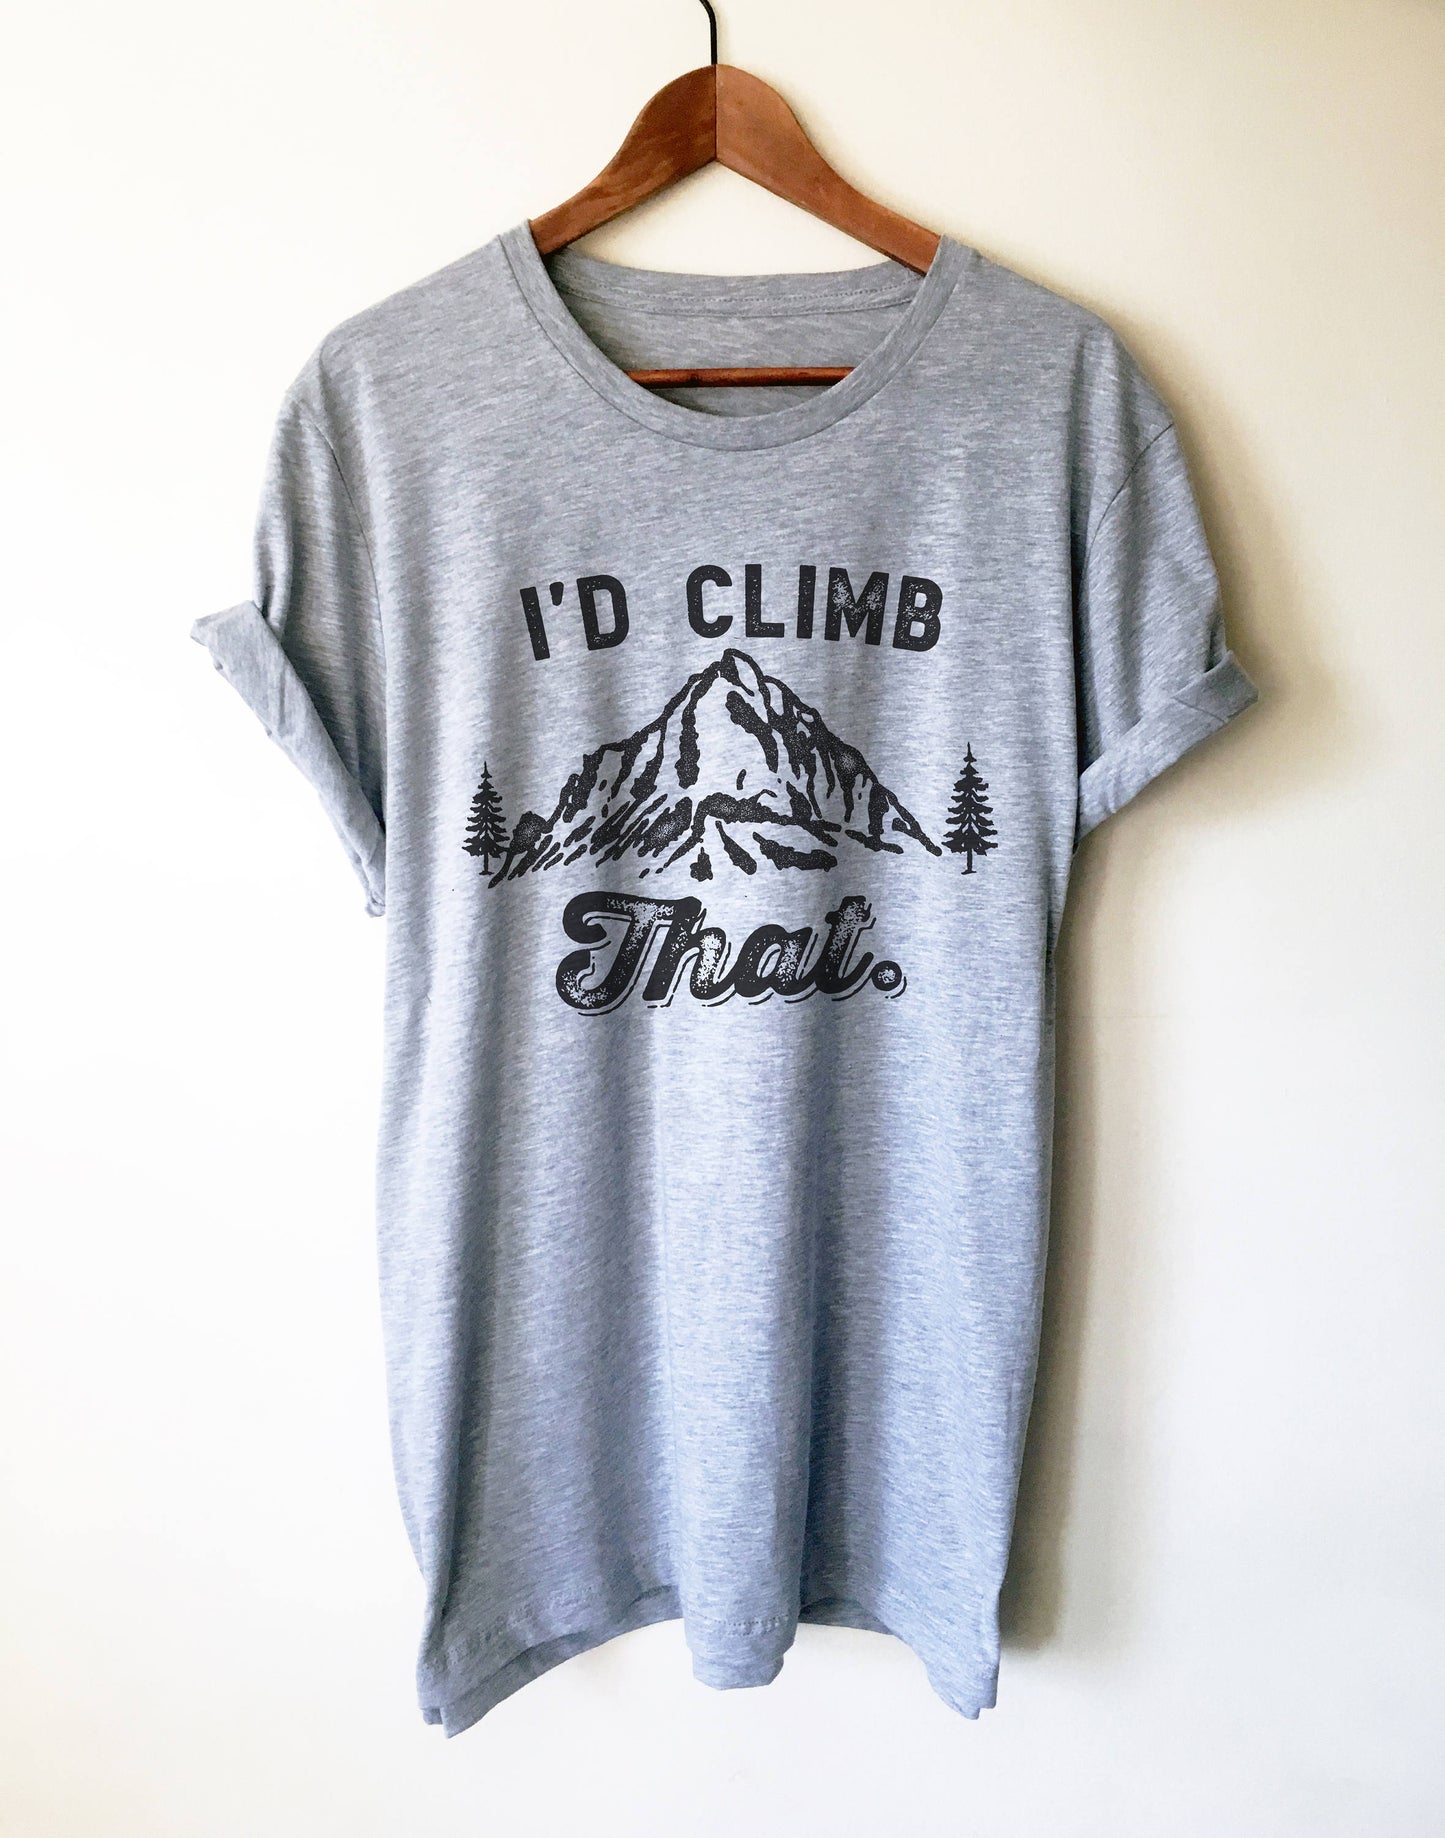 I'd Climb That Unisex Shirt - Climbing shirt | Rock climbing shirt | Mountain climbing | Hiking Shirts women | Mountain shirt |